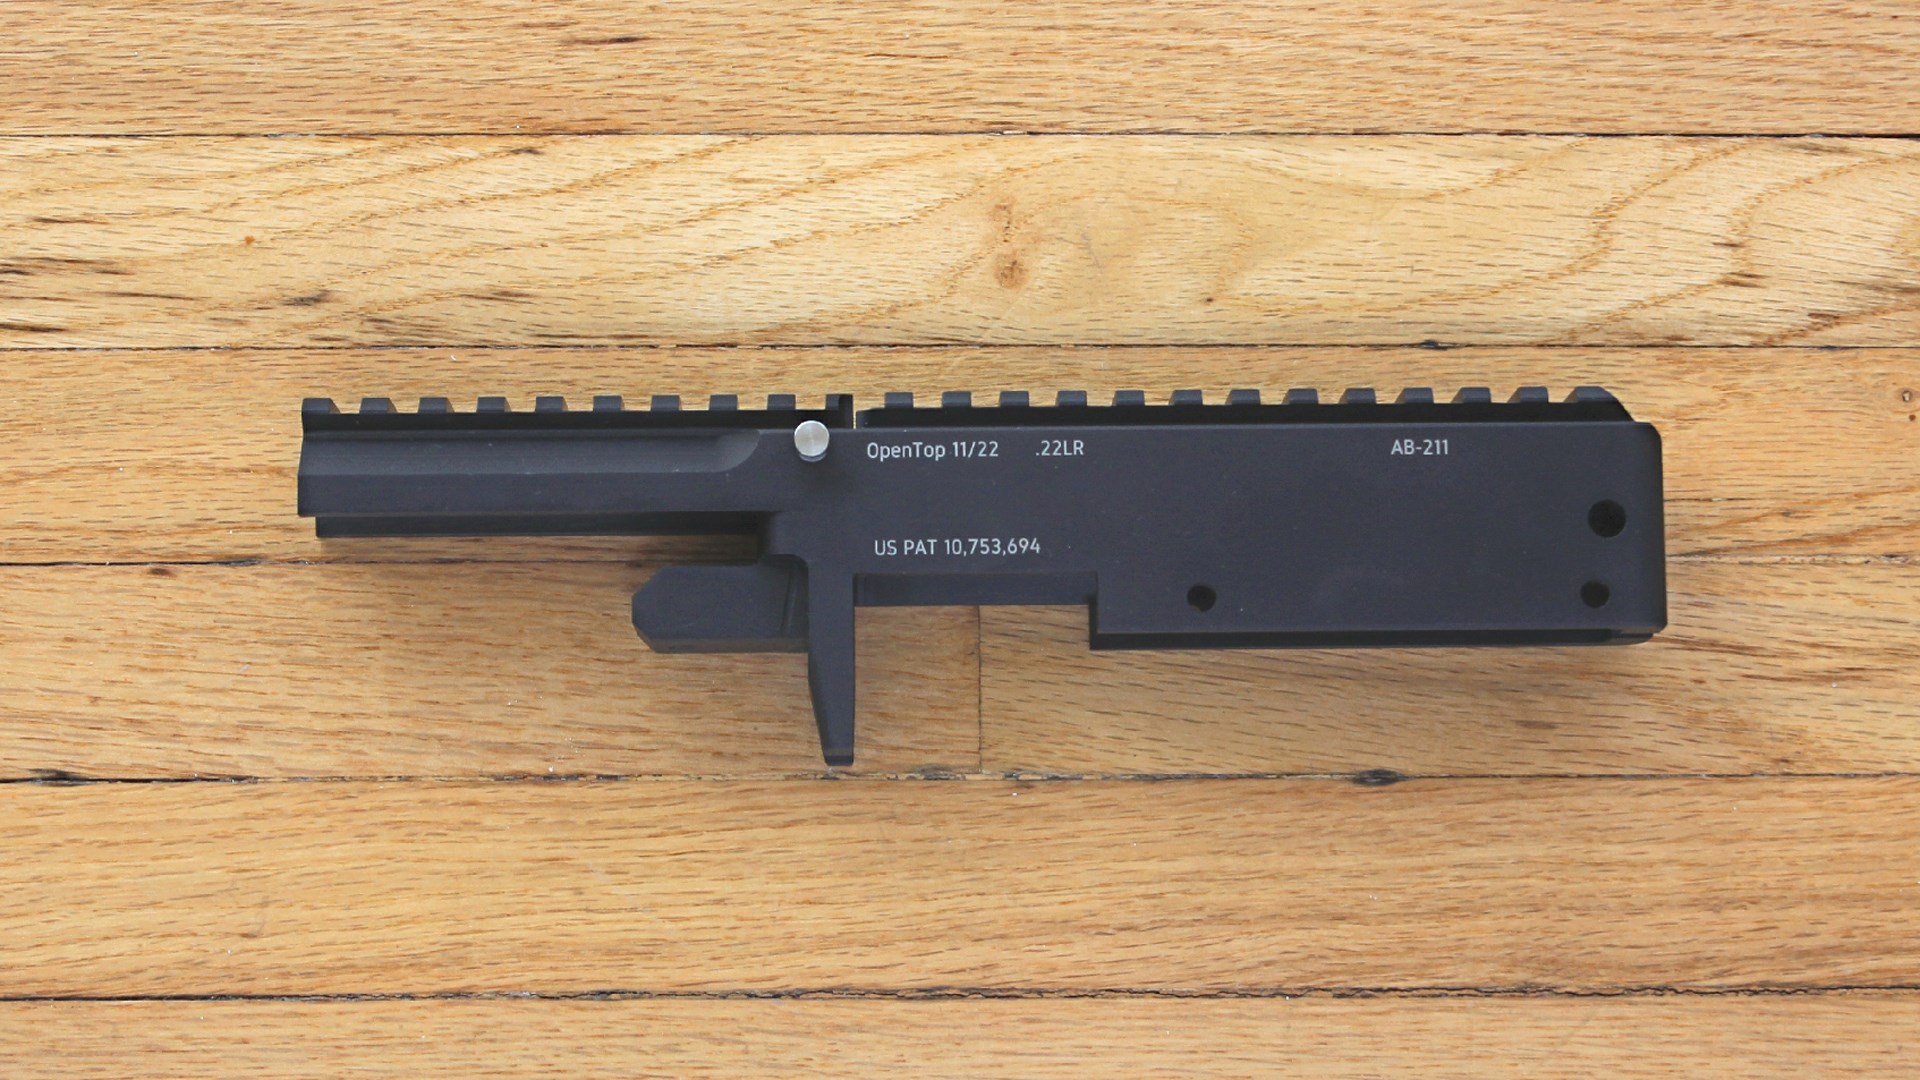 Fletcher Rifle Works OpenTop 11/22 black rifle receiver shown on wood floor